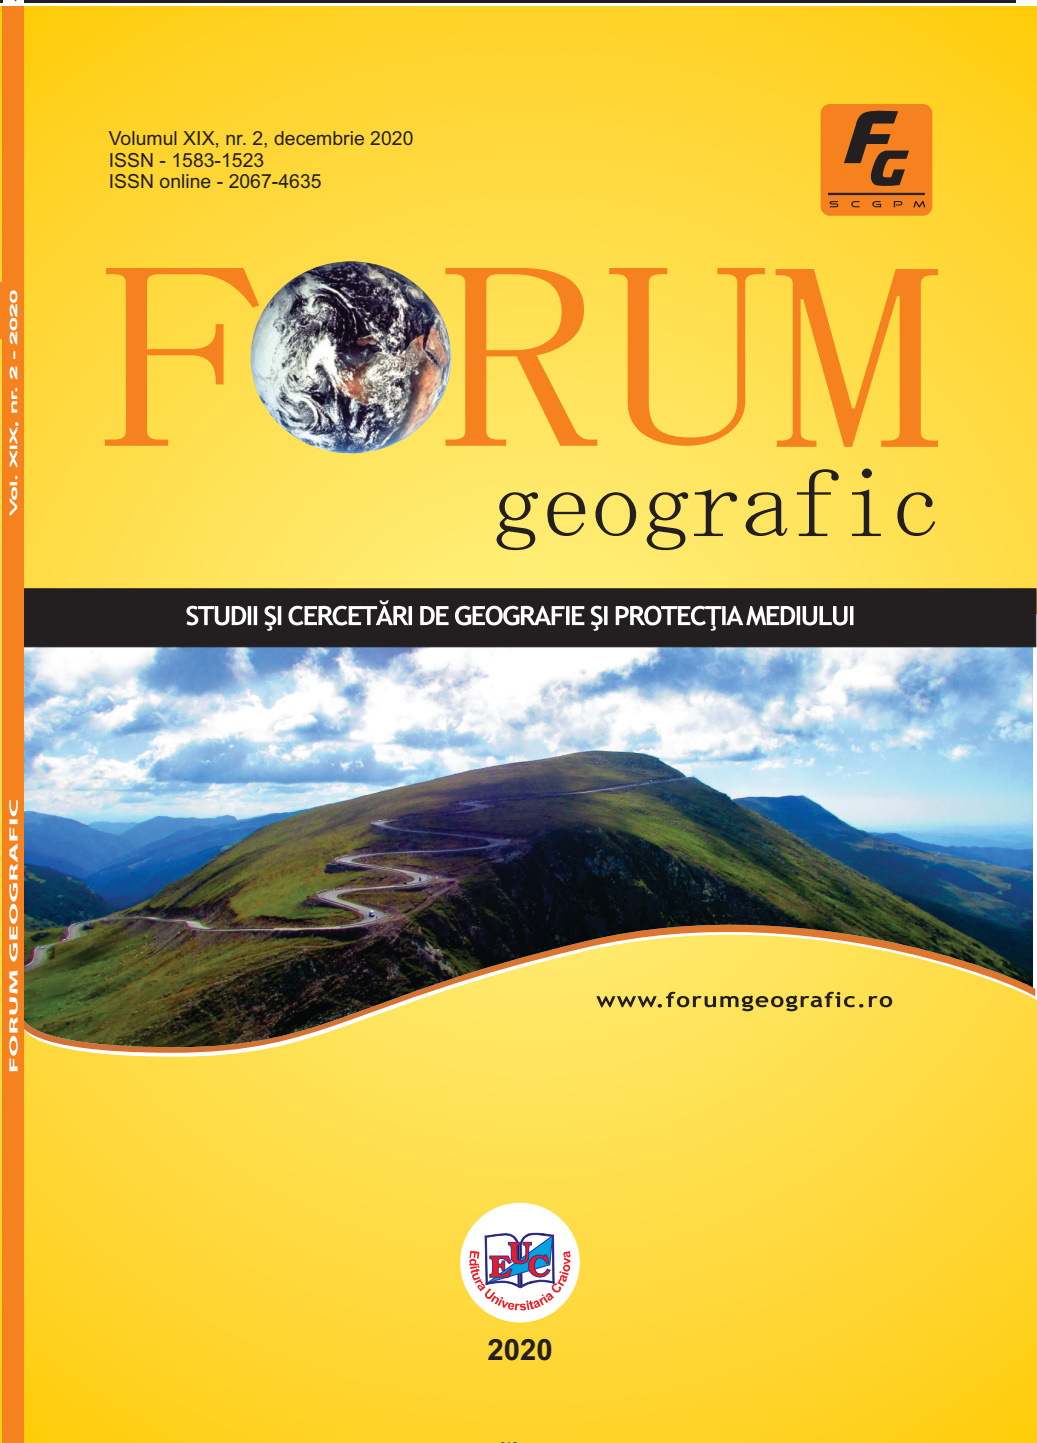 Forum geografic: Volume XIX, issue 2